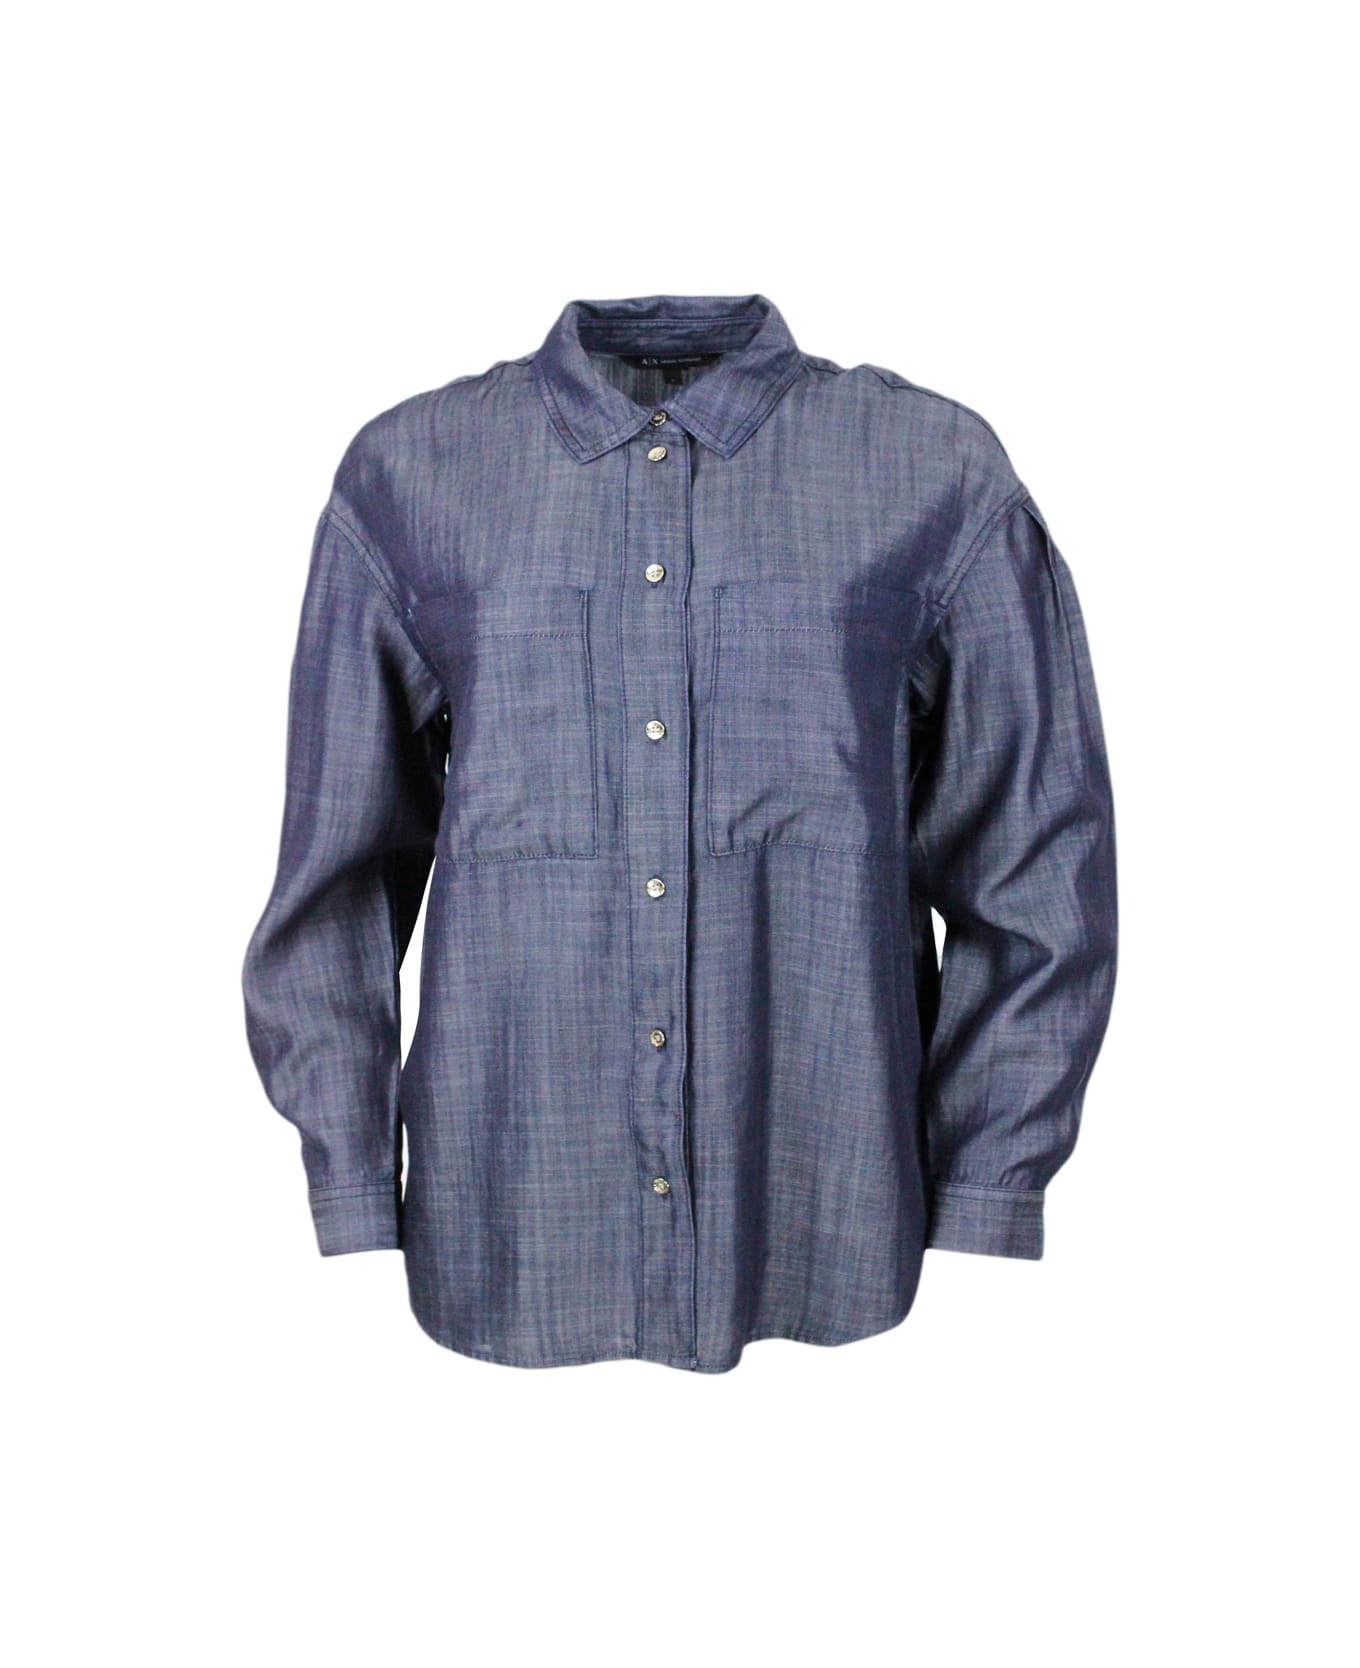 Armani Collezioni Lightweight Long-sleeved Denim Shirt With Chest Pockets And Button Closure - Denim Dark シャツ